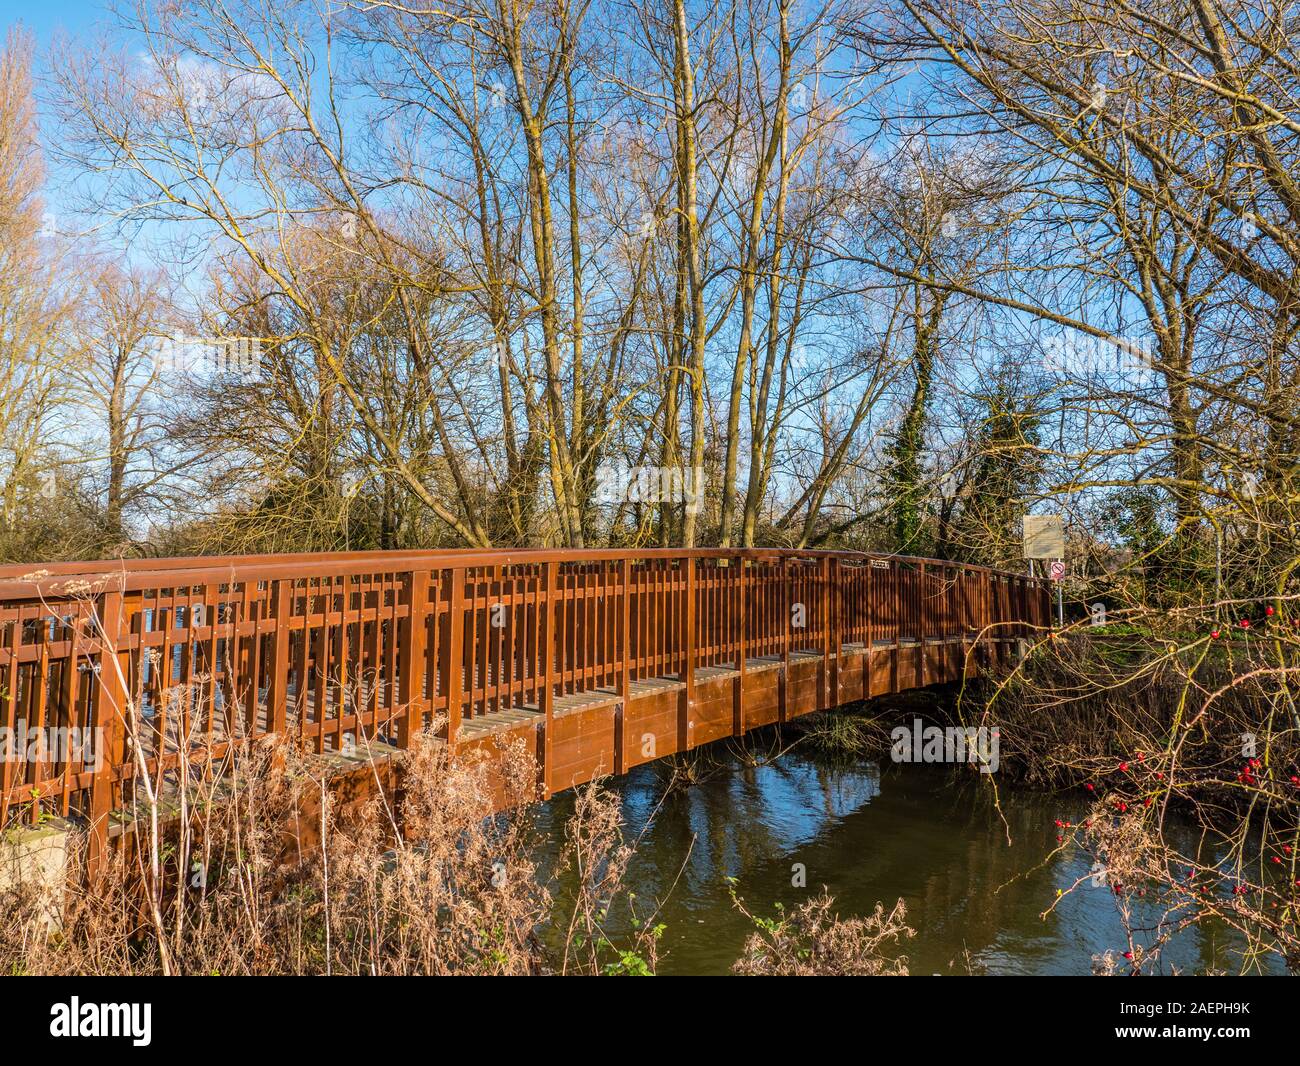 Footbridge Crossing River Cherwell, Winter Trees and Plants, University Parks, Oxford, Oxfordshire, England, UK, GB. Stock Photo